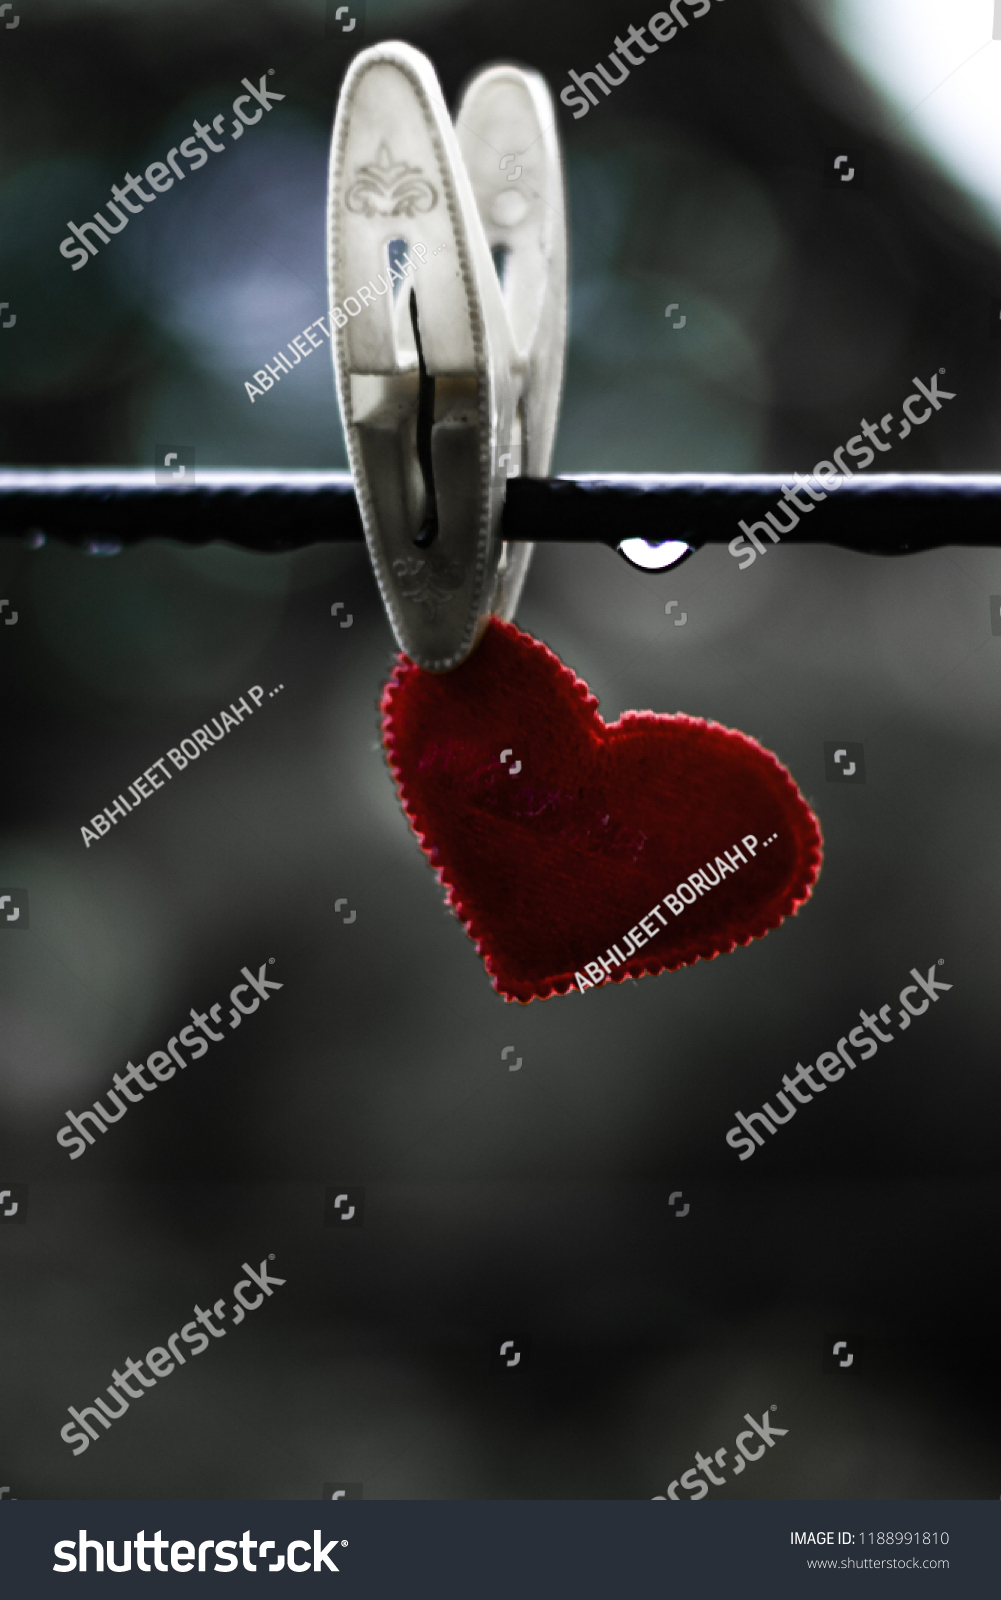 Love rain wallpaper stock photo